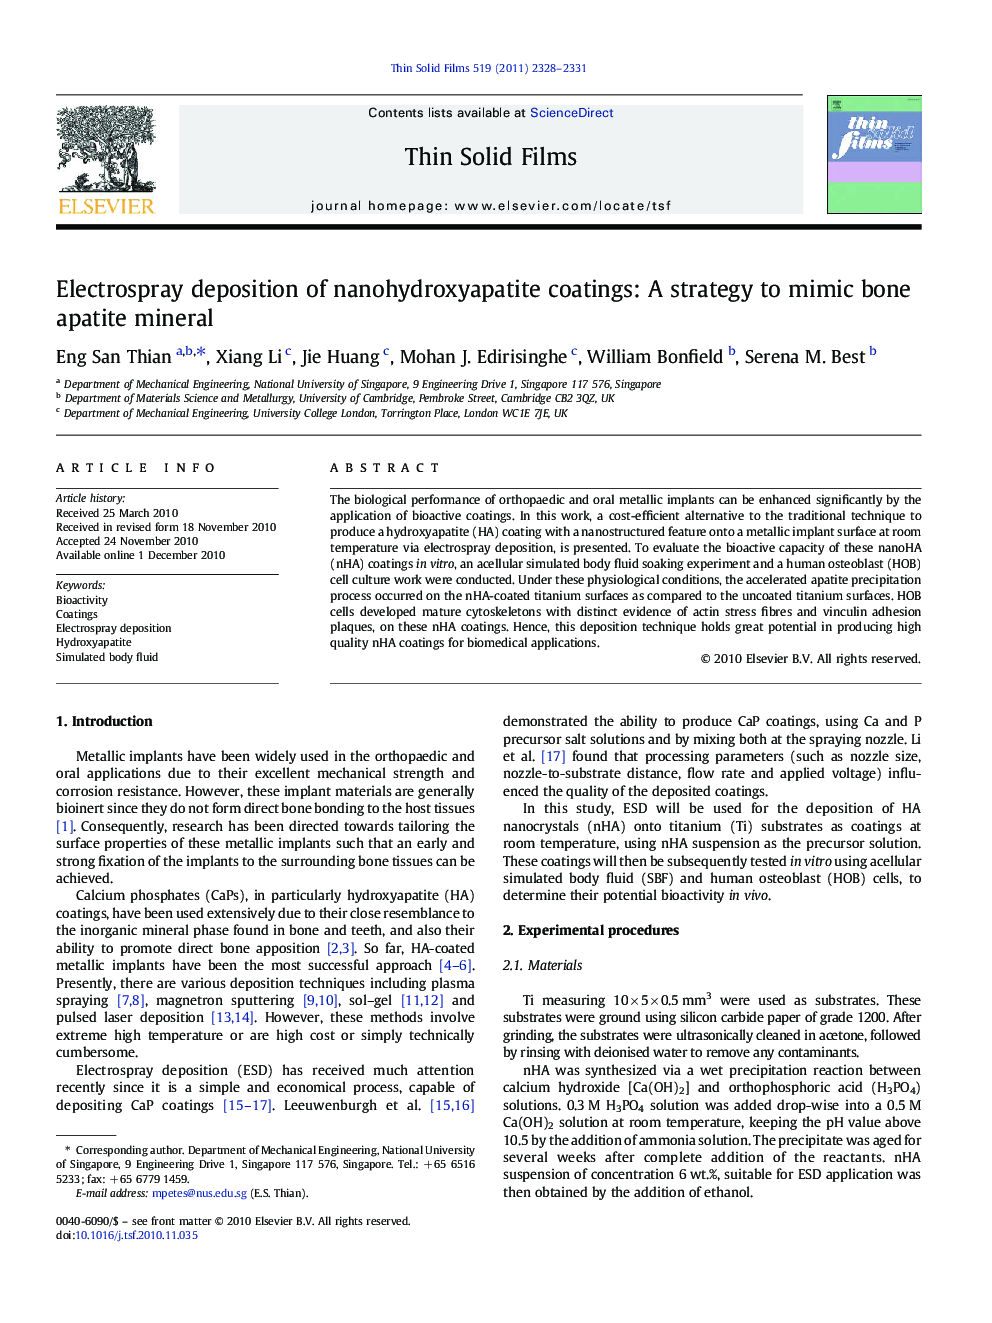 Electrospray deposition of nanohydroxyapatite coatings: A strategy to mimic bone apatite mineral